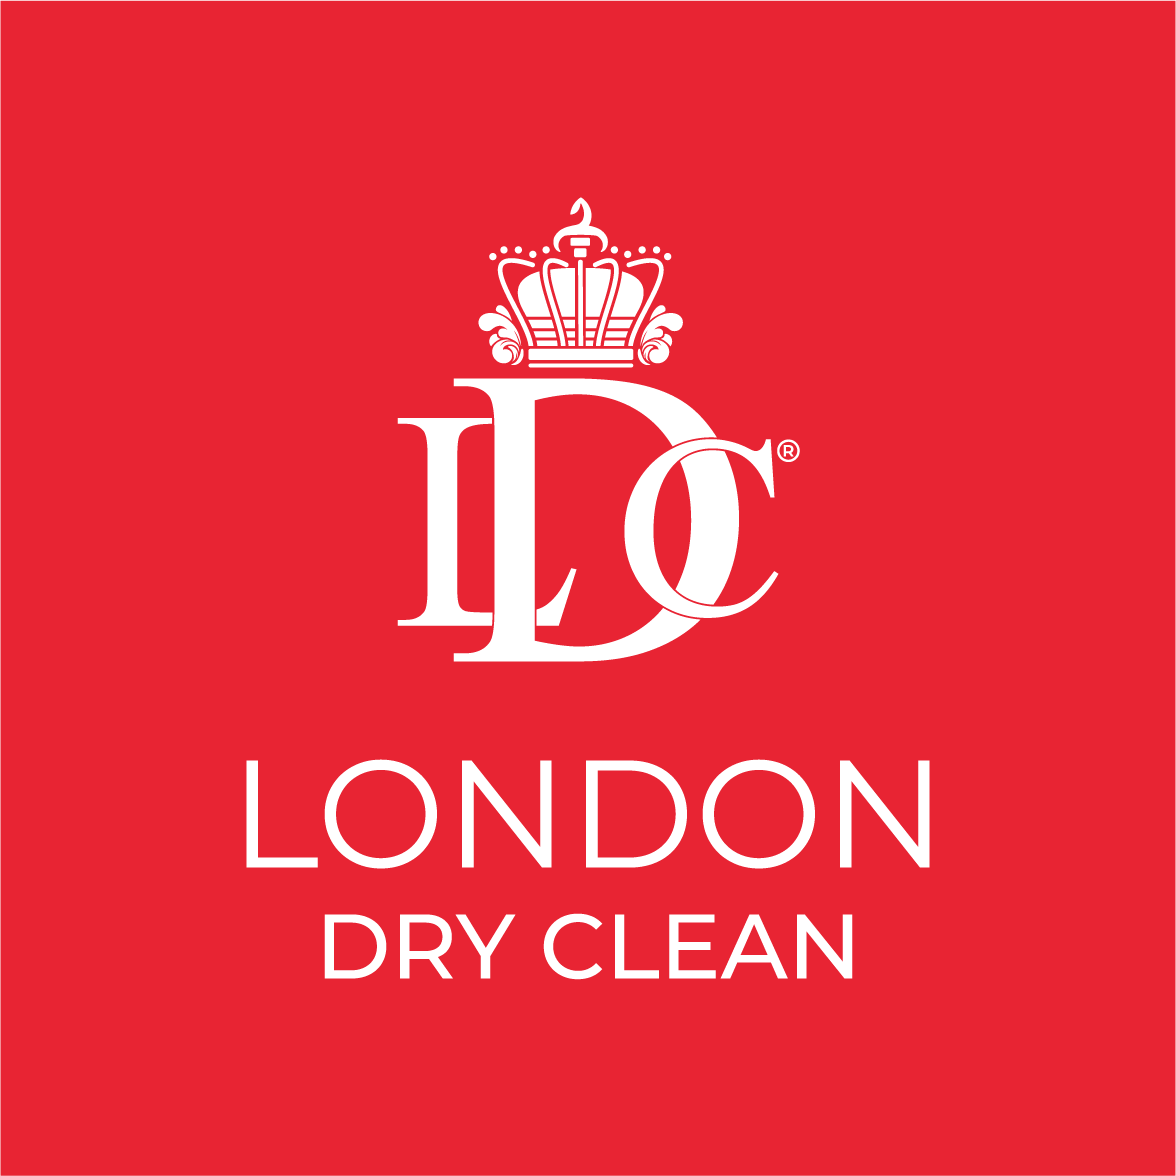 London Dry Clean